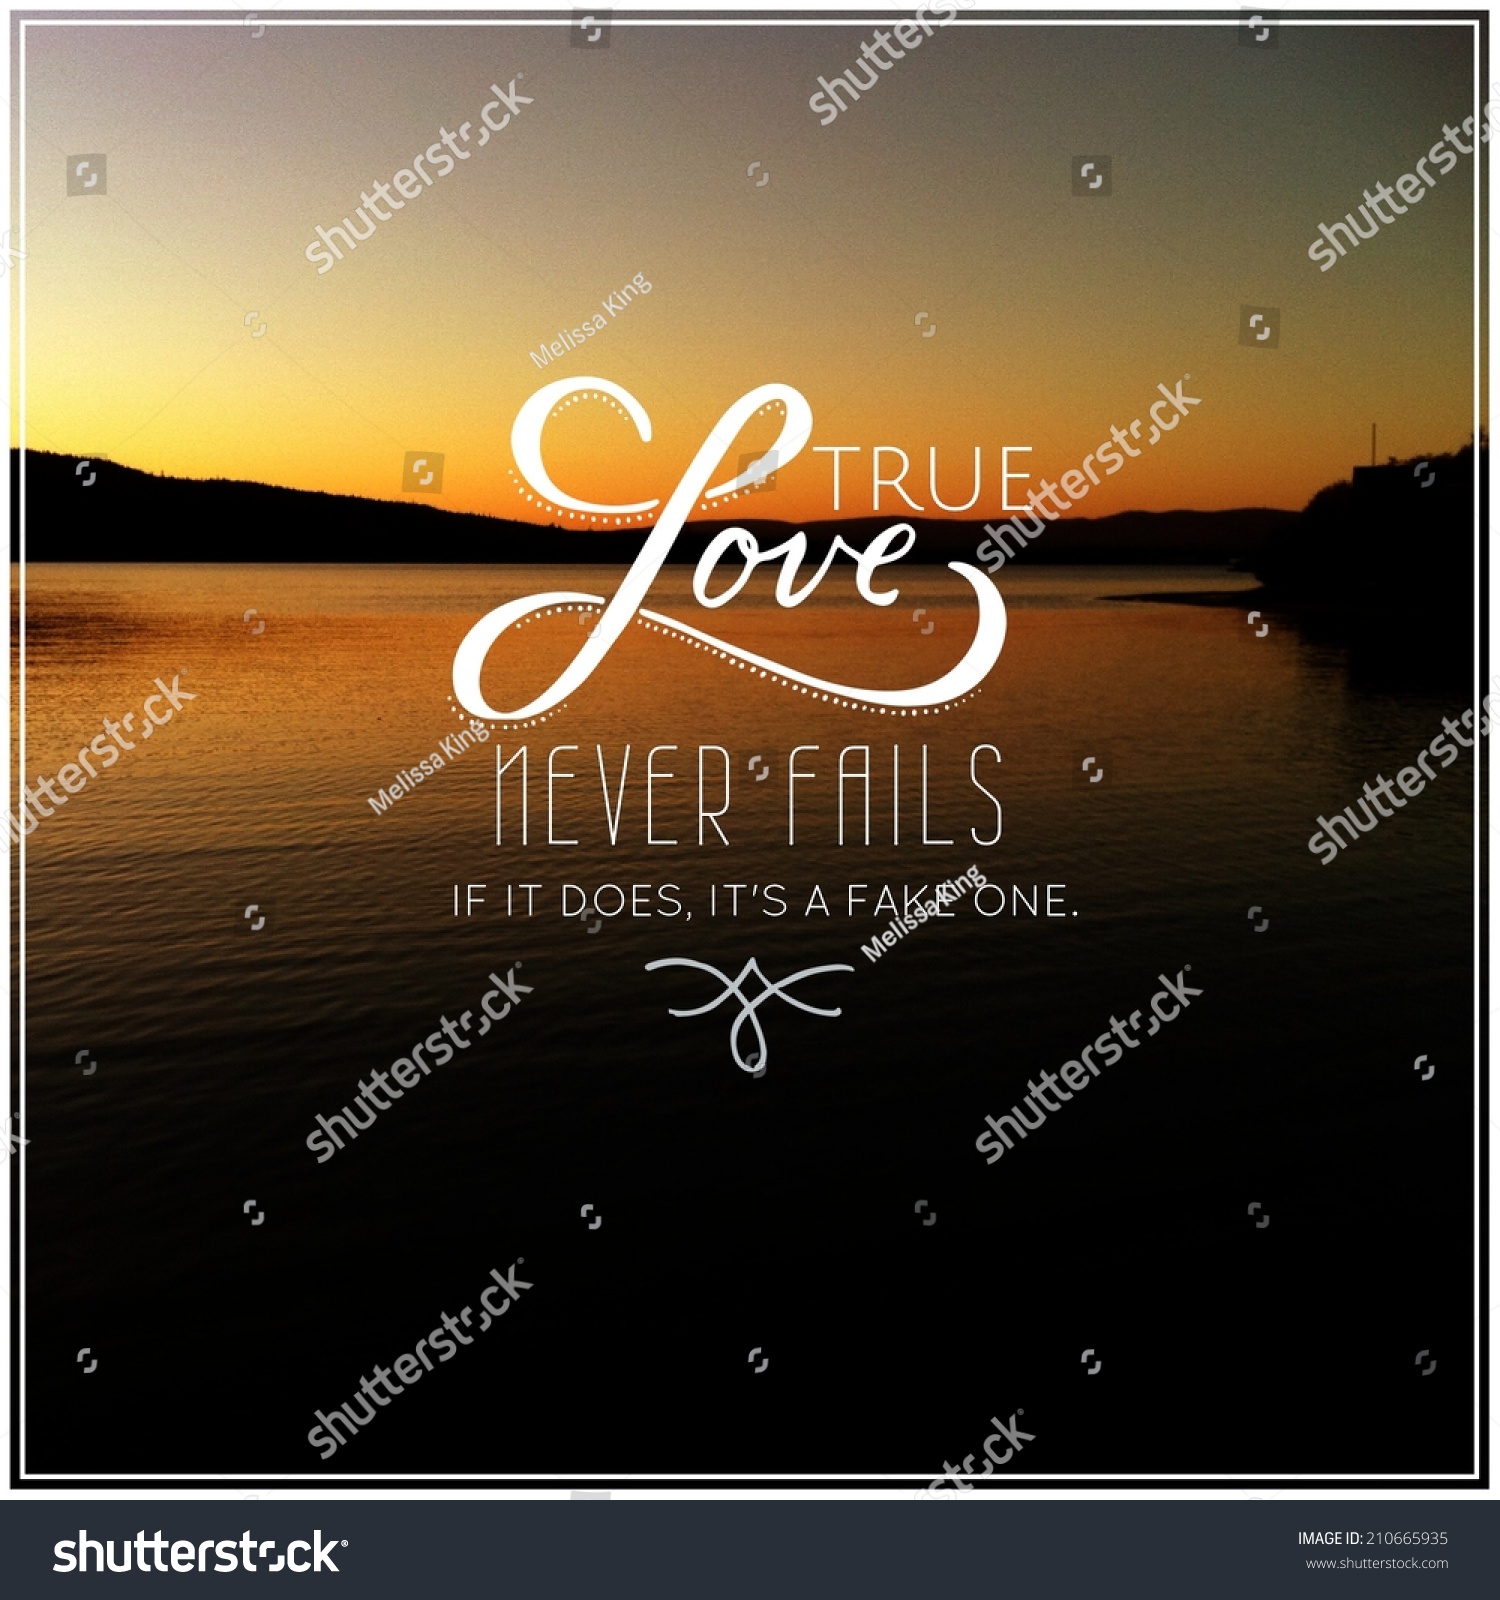 Inspirational Typographic Quote True love never fails